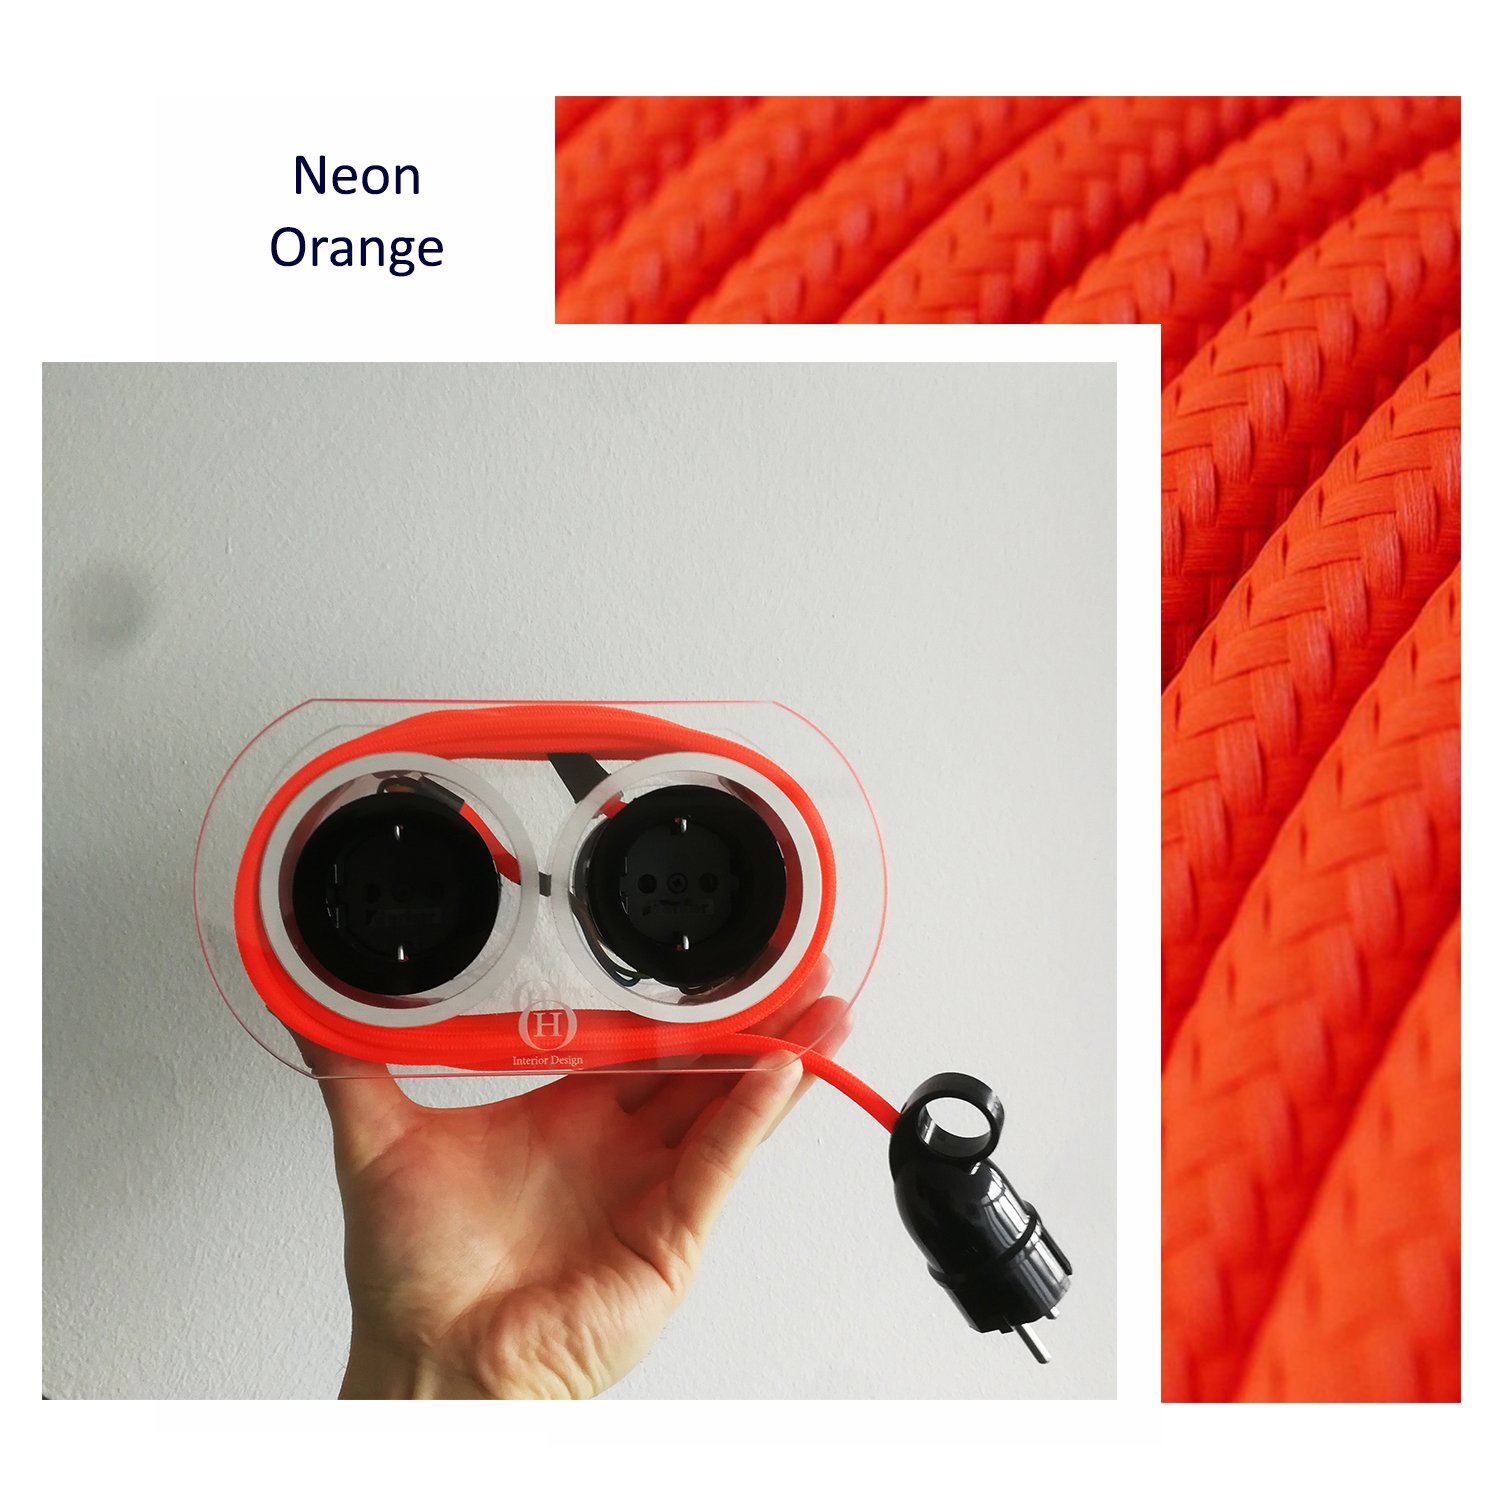 Extension Cord for 4 Plugs_Neon Orange_black plug.jpg